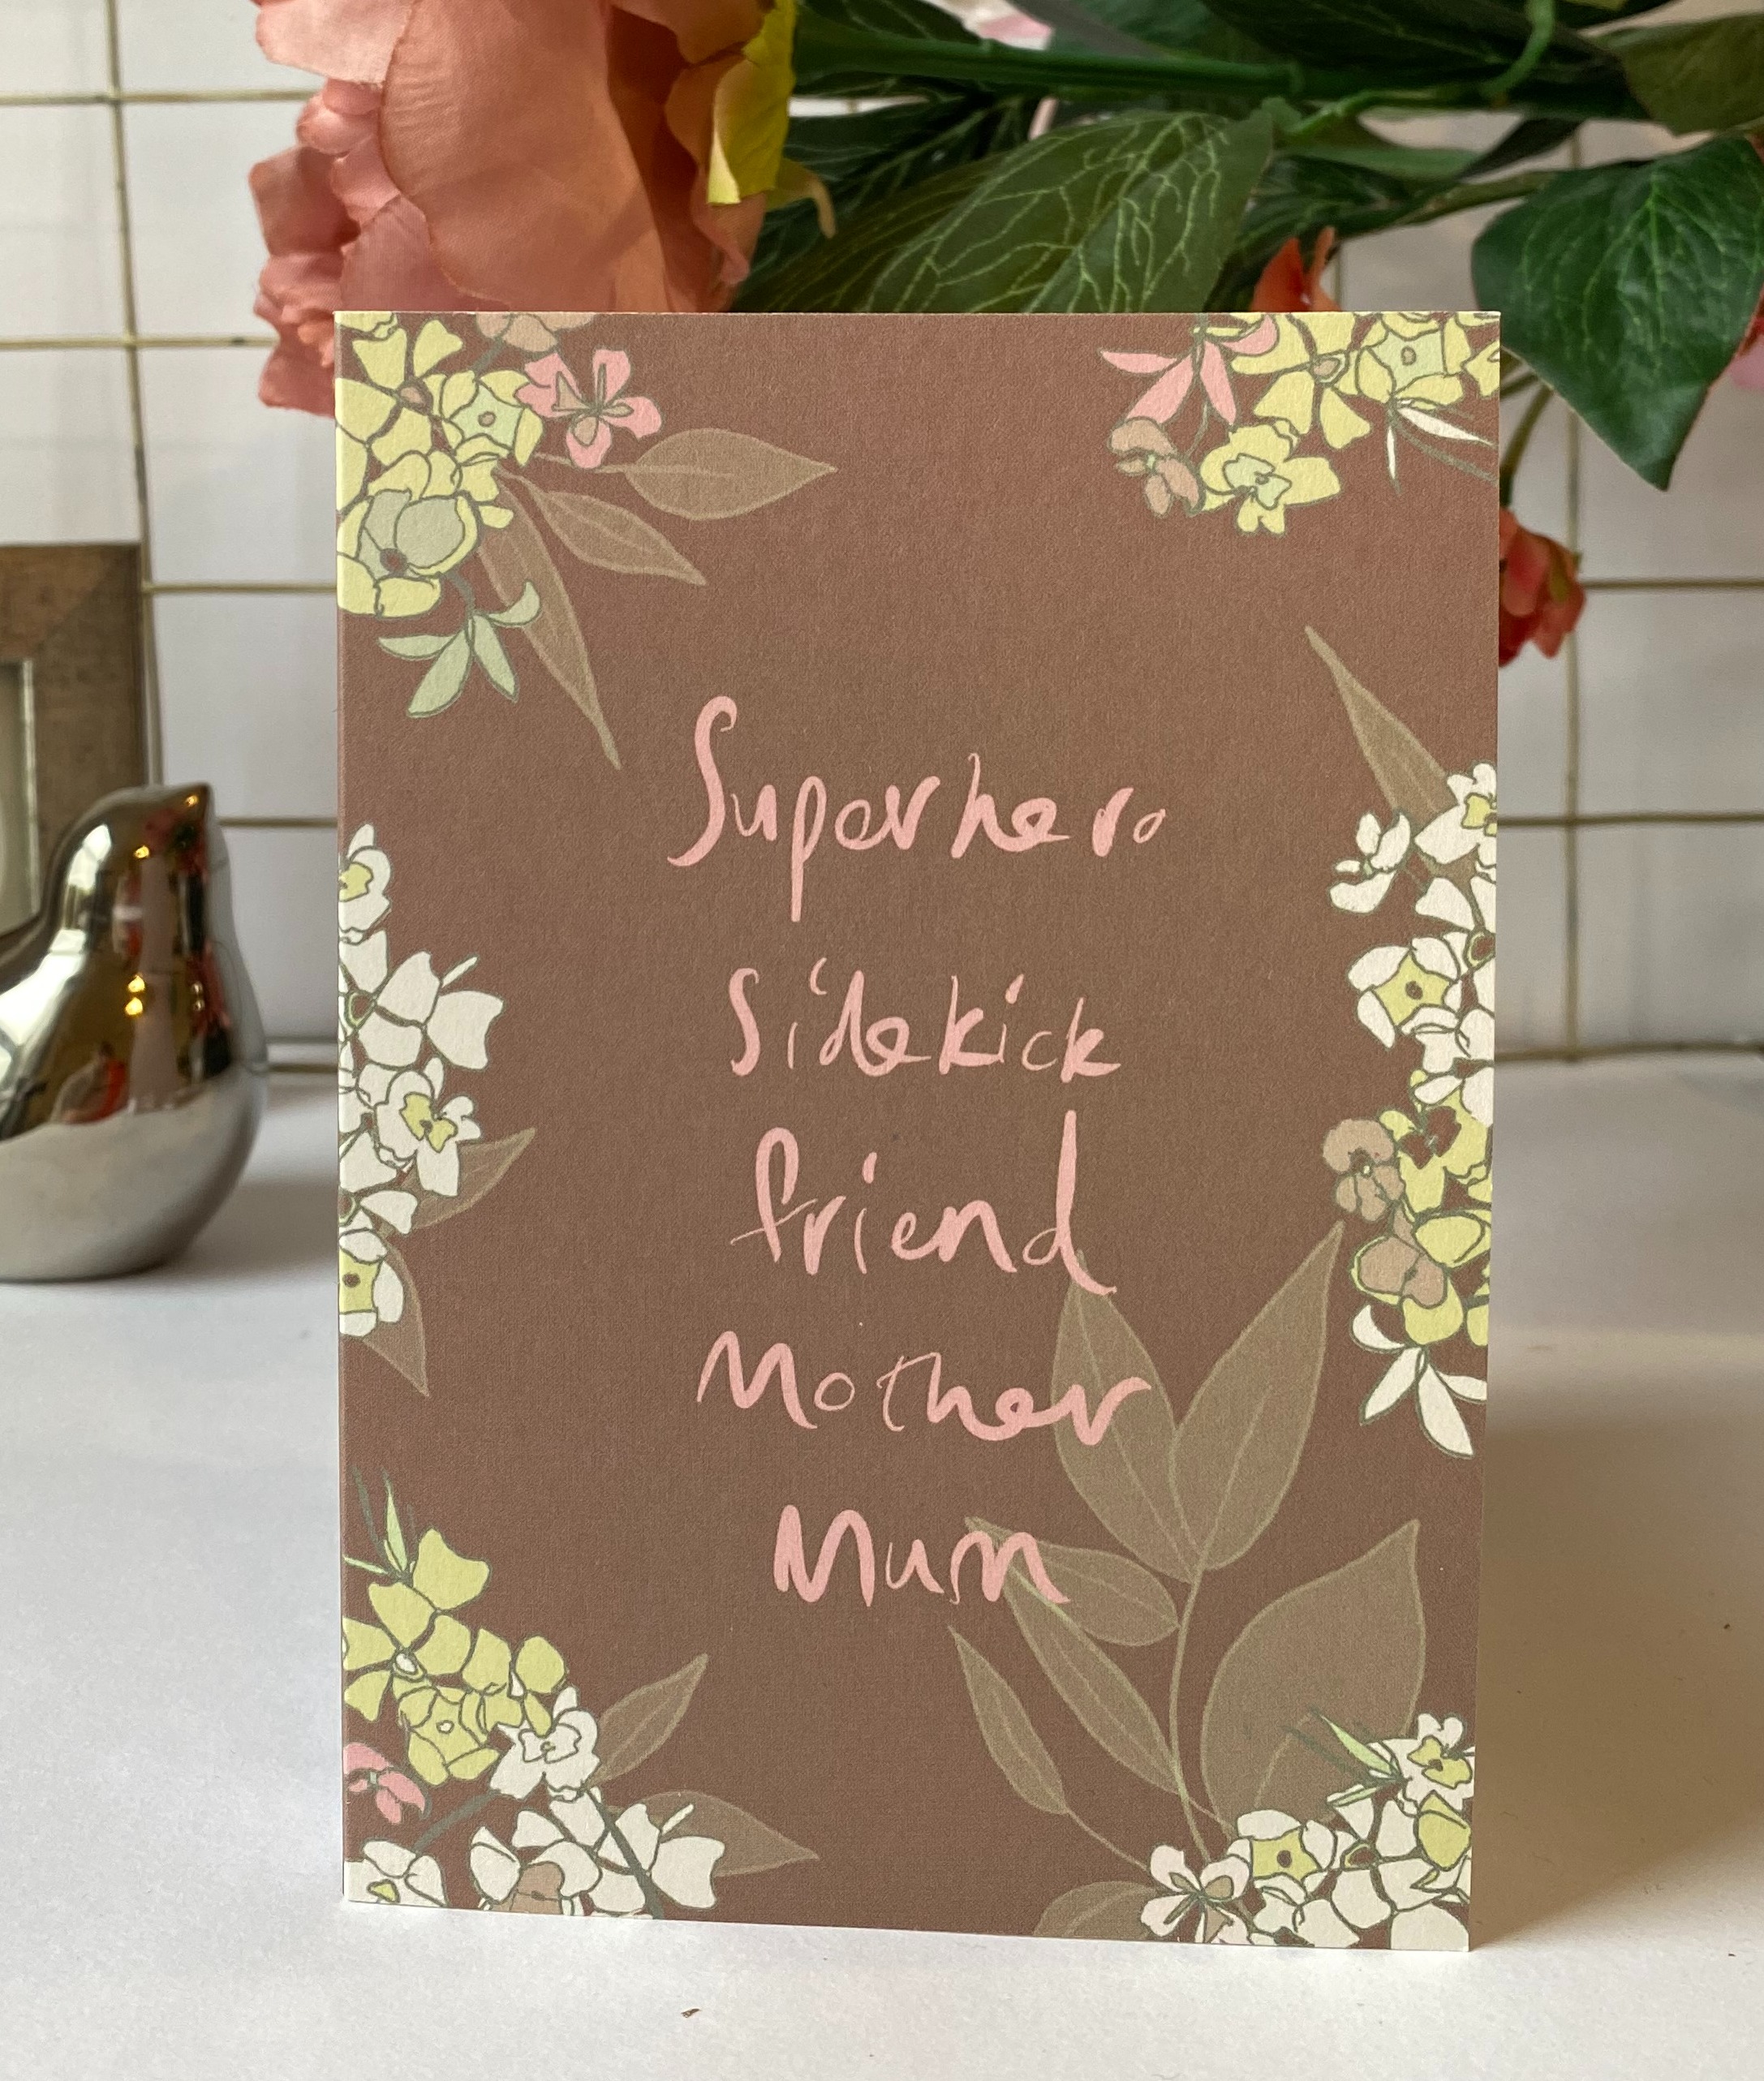 Superhero Sidekick Friend Mother Mum- Mother's day/ Birthday card LMMD001